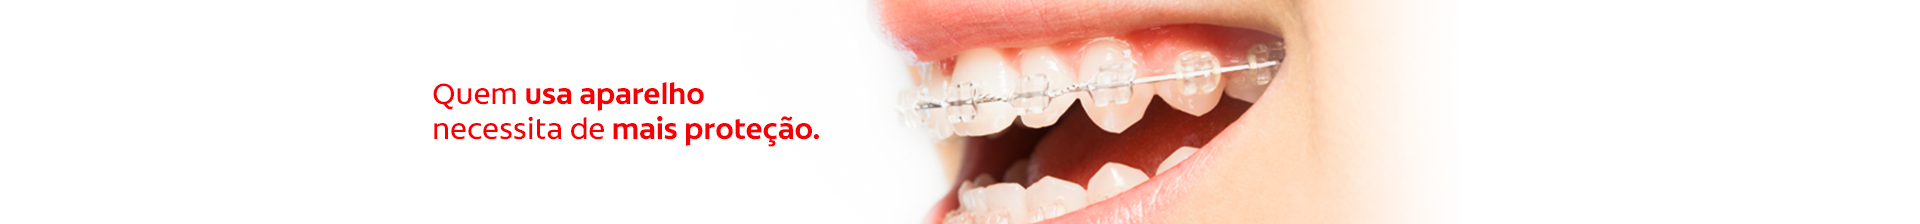 Aparelho Ortodontico | Colgate Profissional